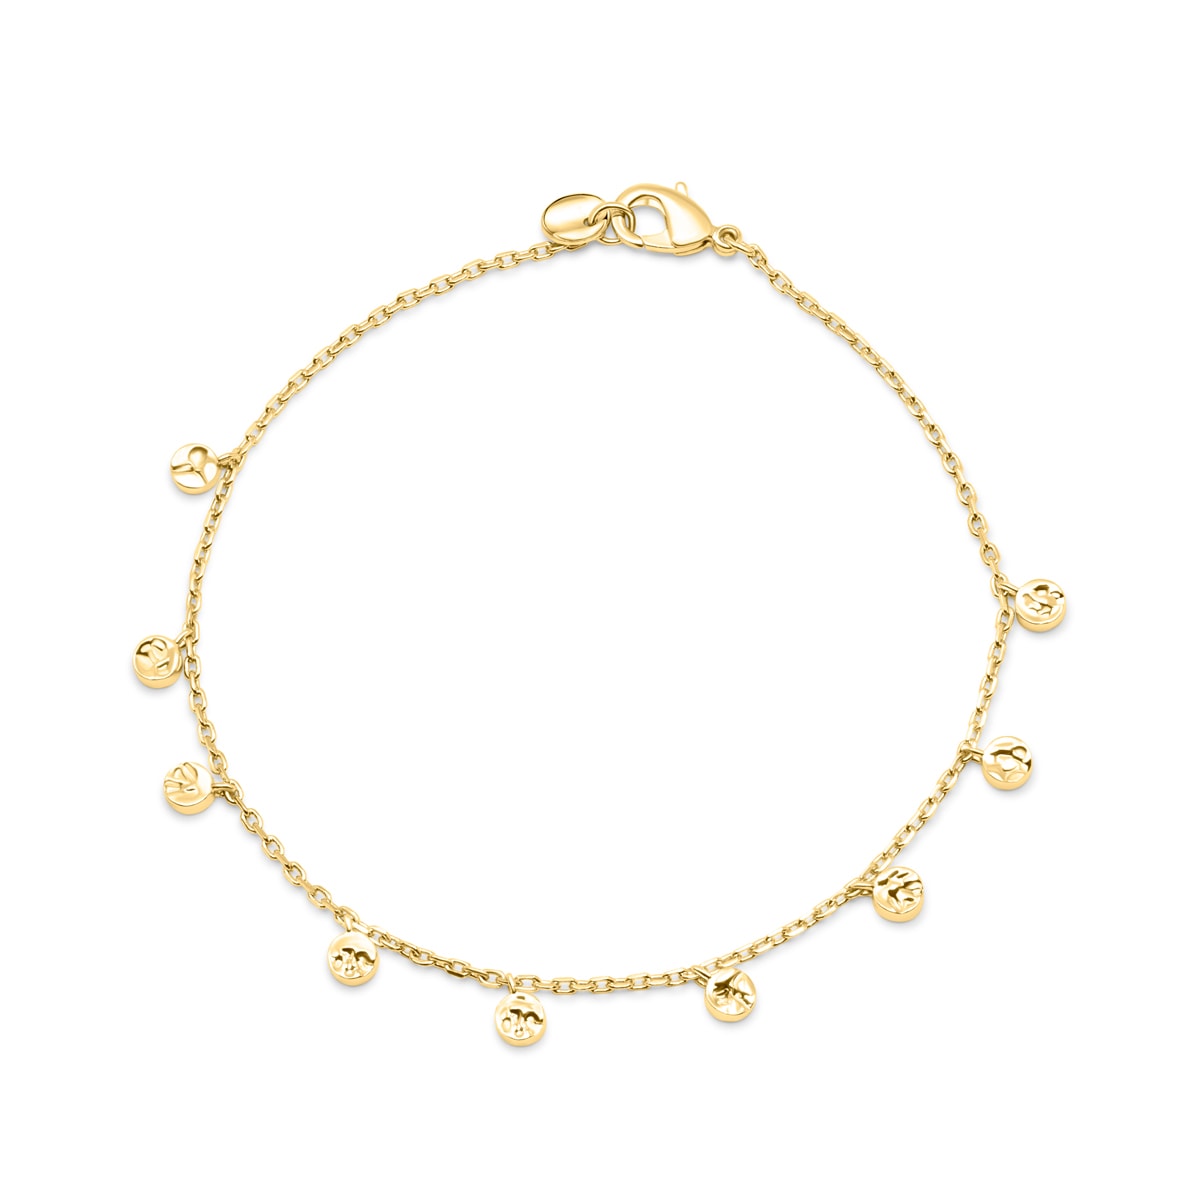 Gold chain bracelet with pendants